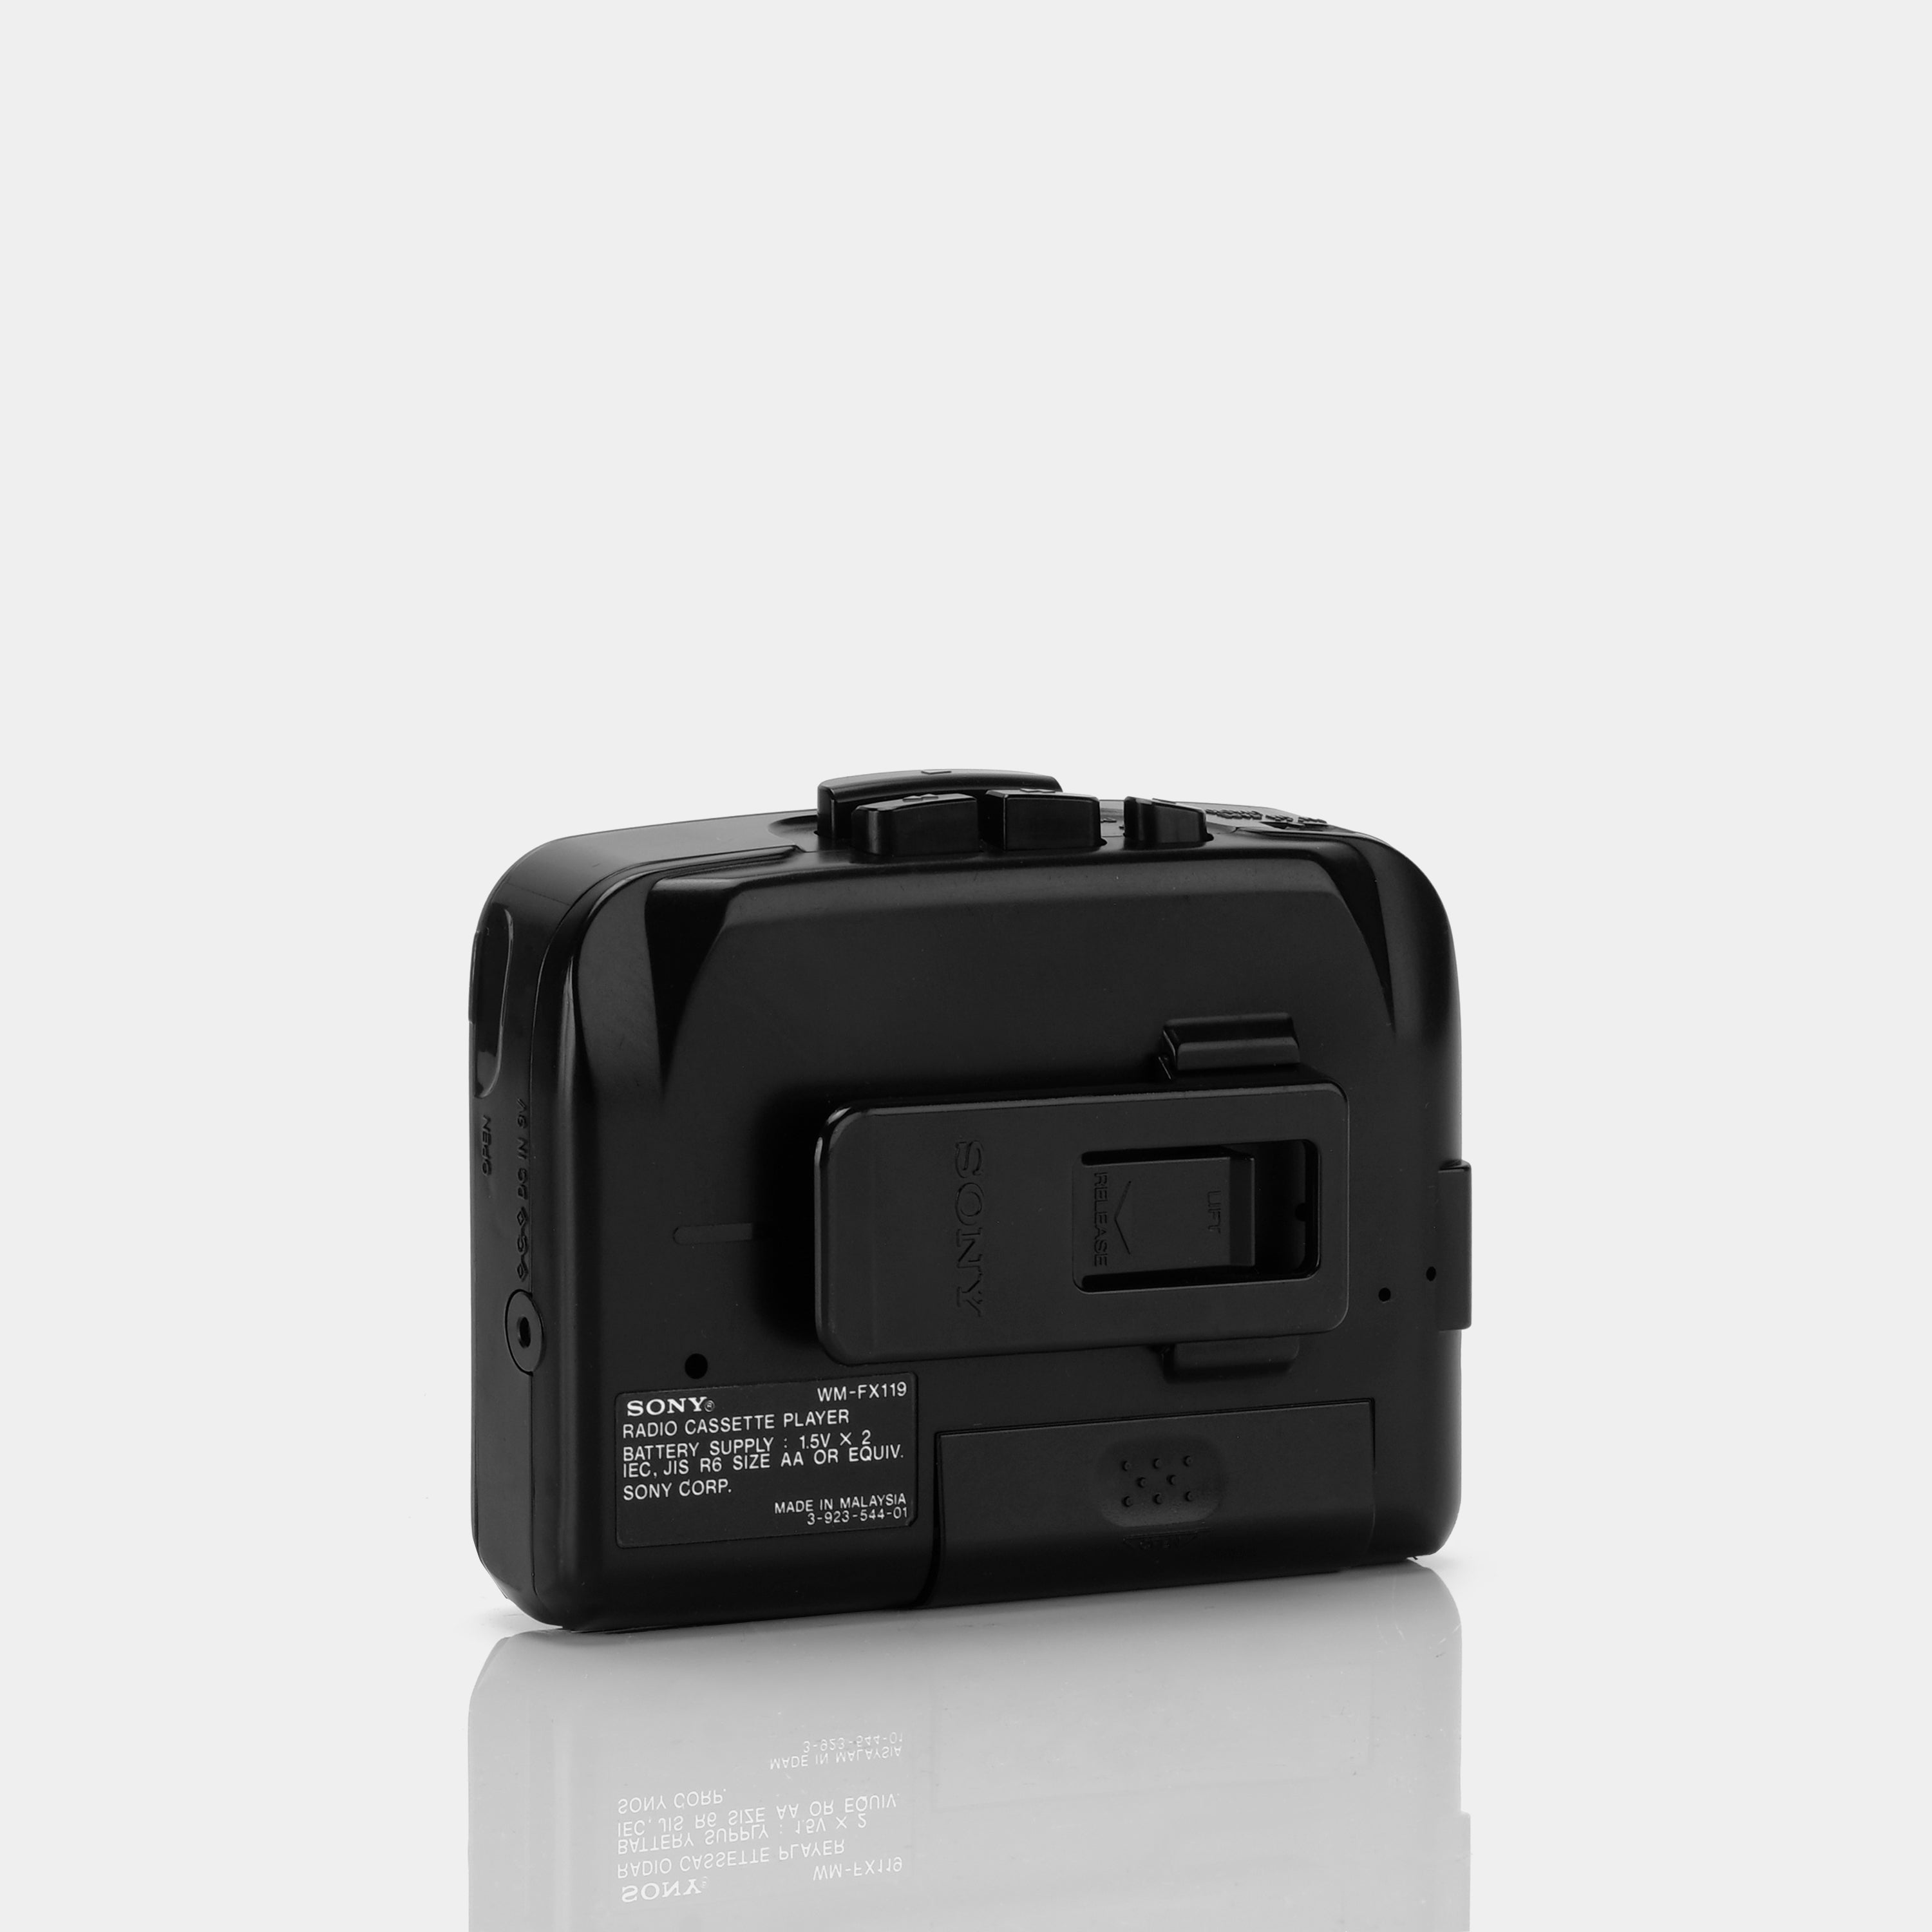 Sony Walkman WM-FX119 Teal Portable Cassette Player